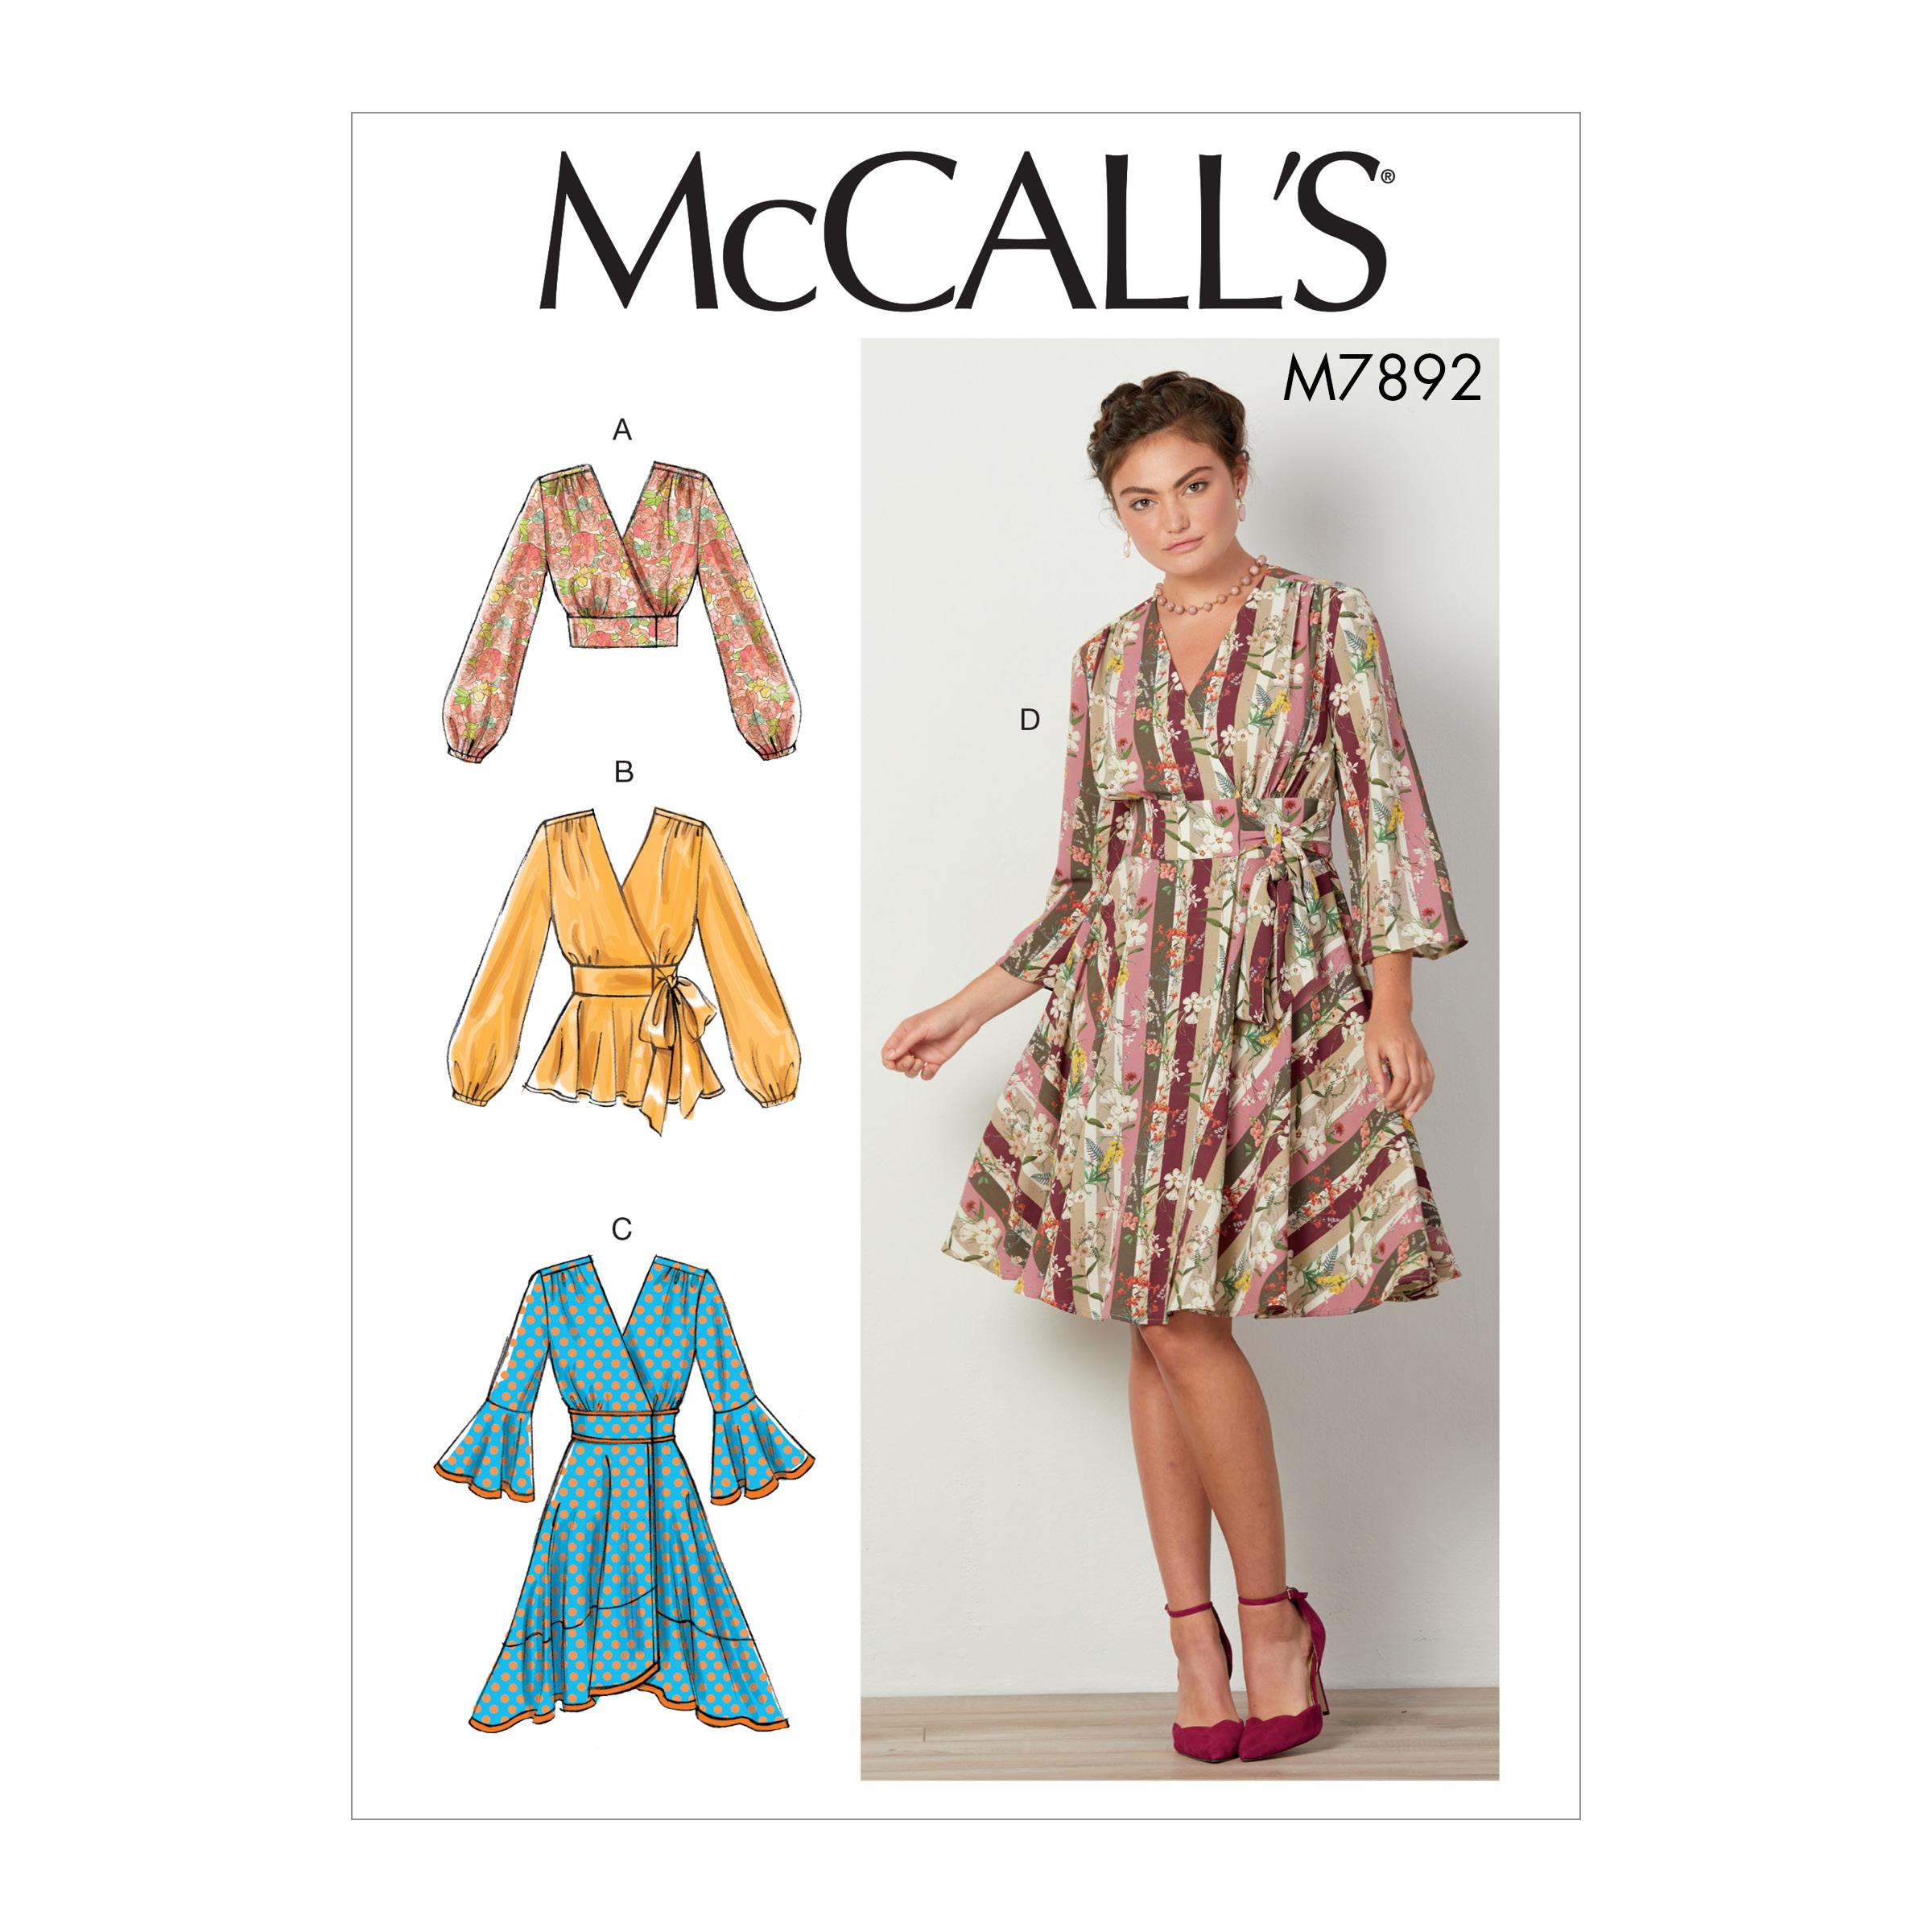 McCalls M7892 Misses Dresses, Misses Tops